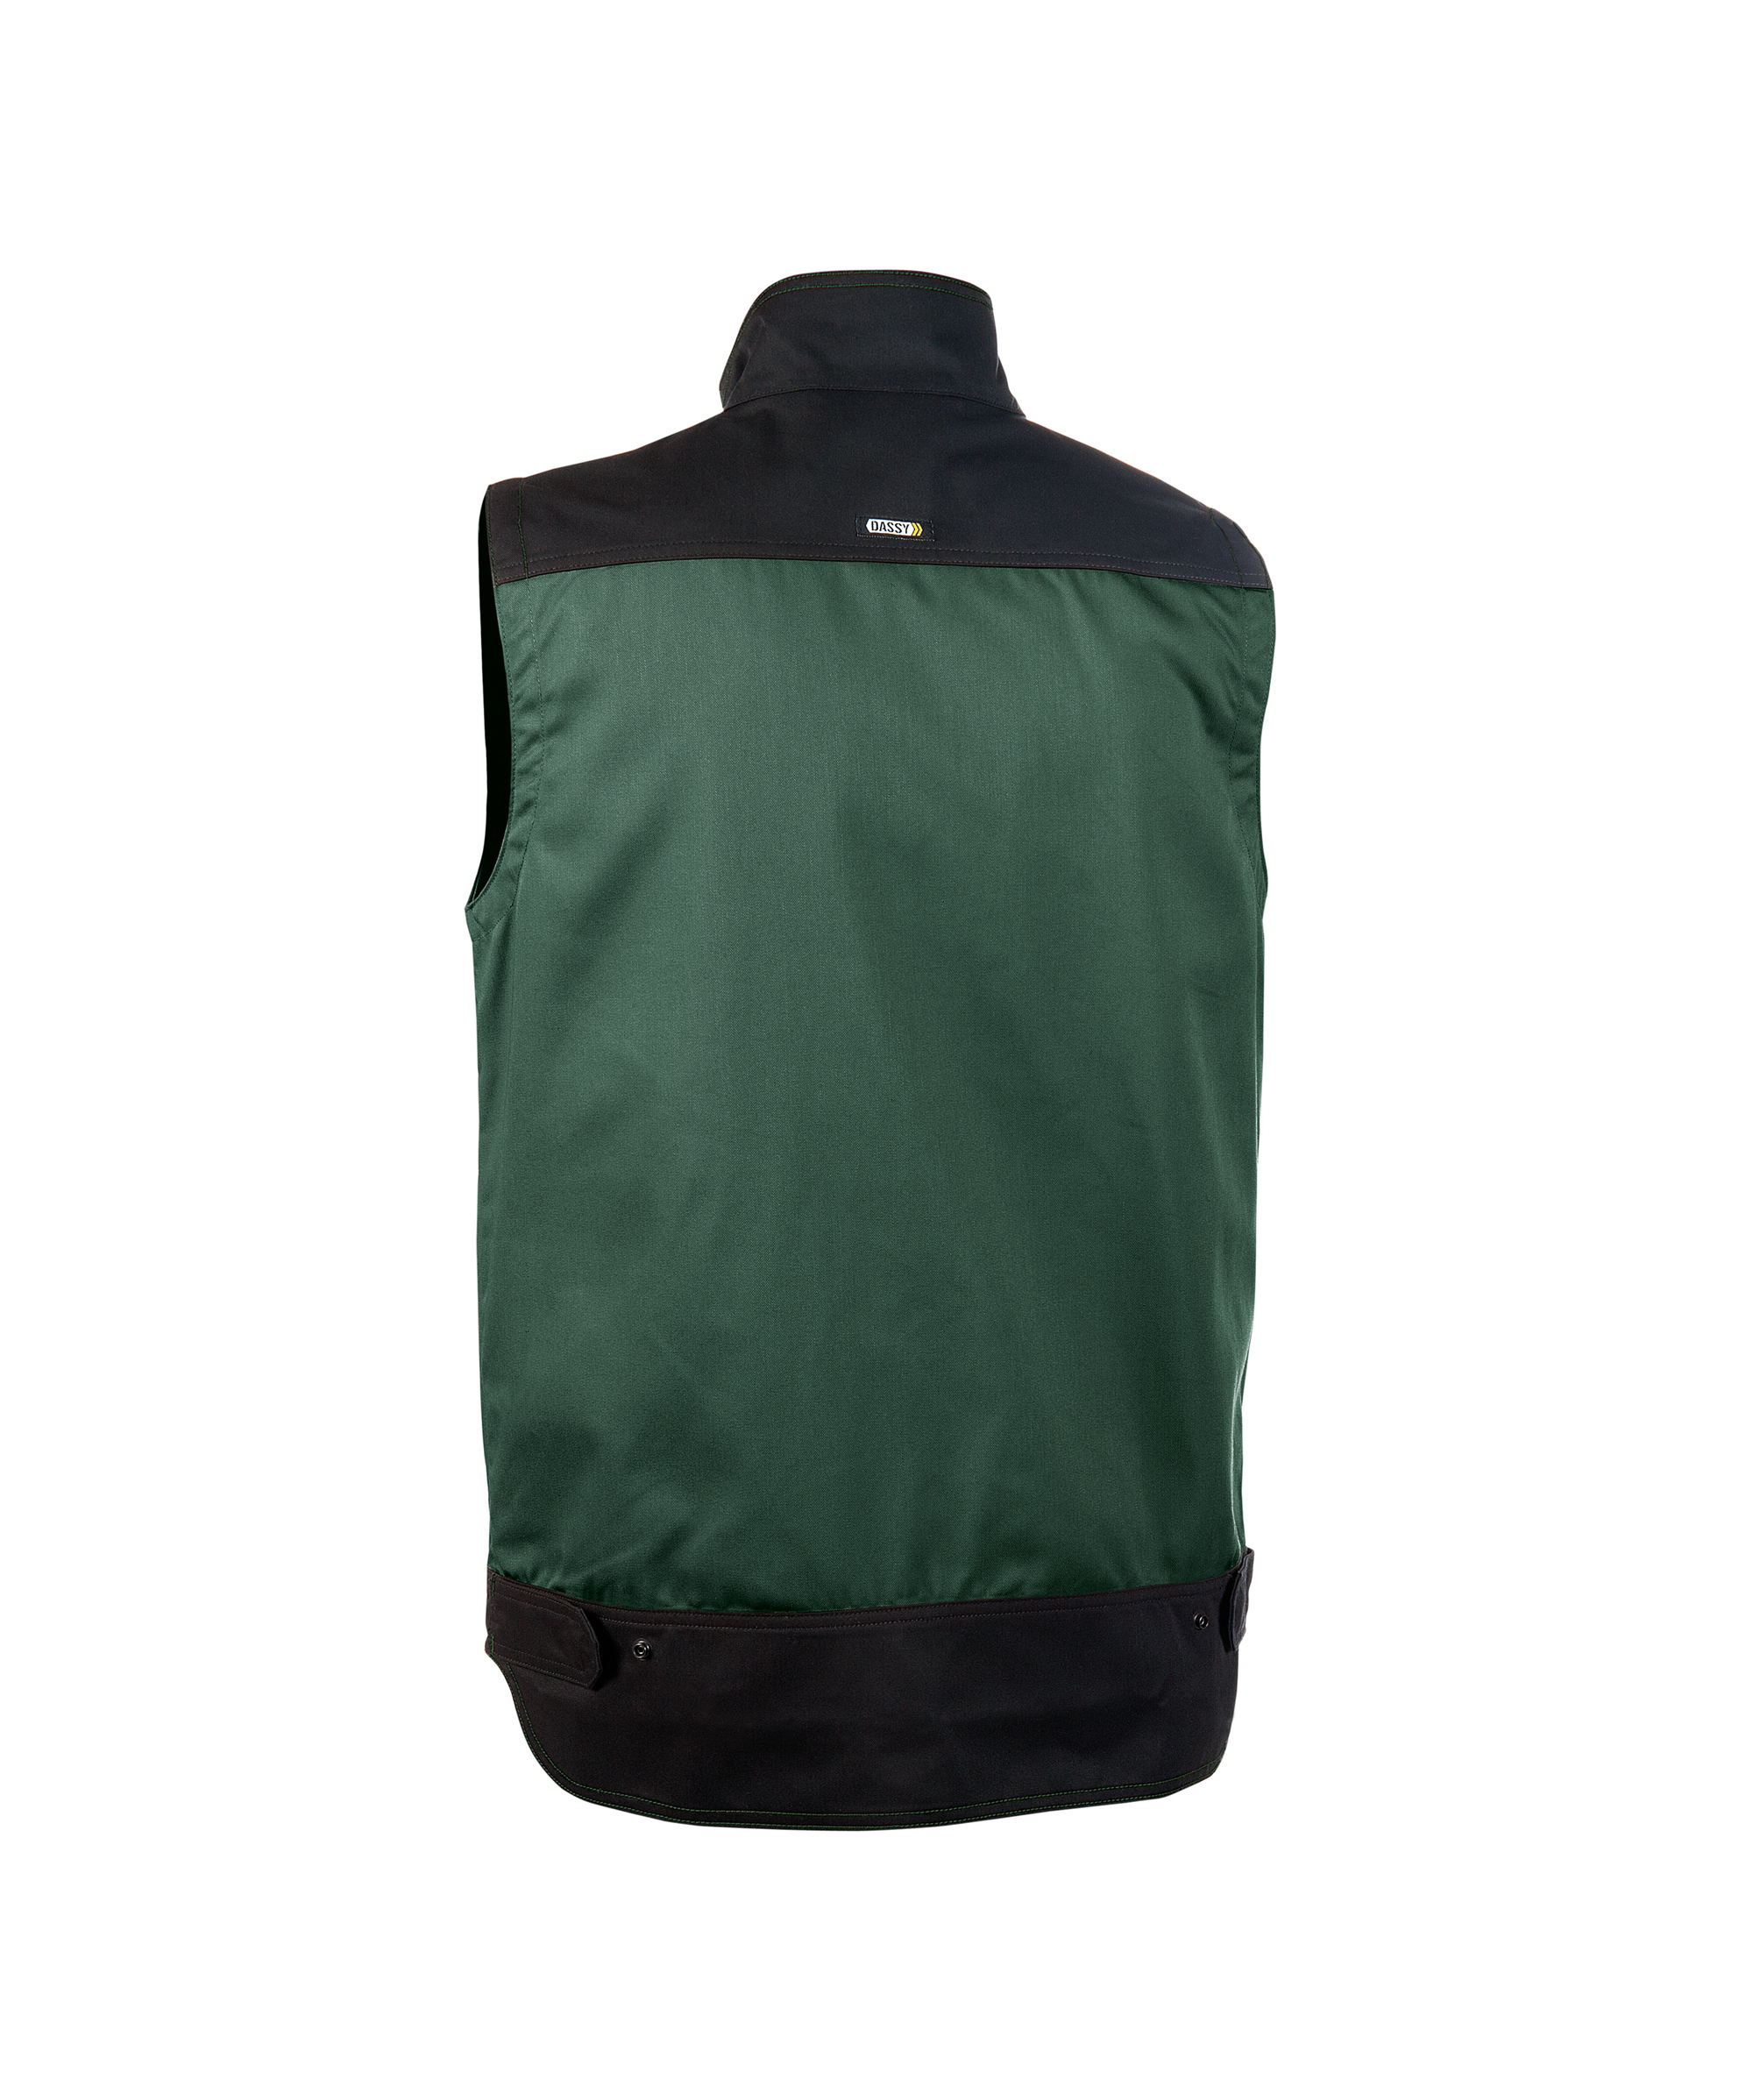 faro_two-tone-sleeveless-work-jacket_bottle-green-black_back.jpg